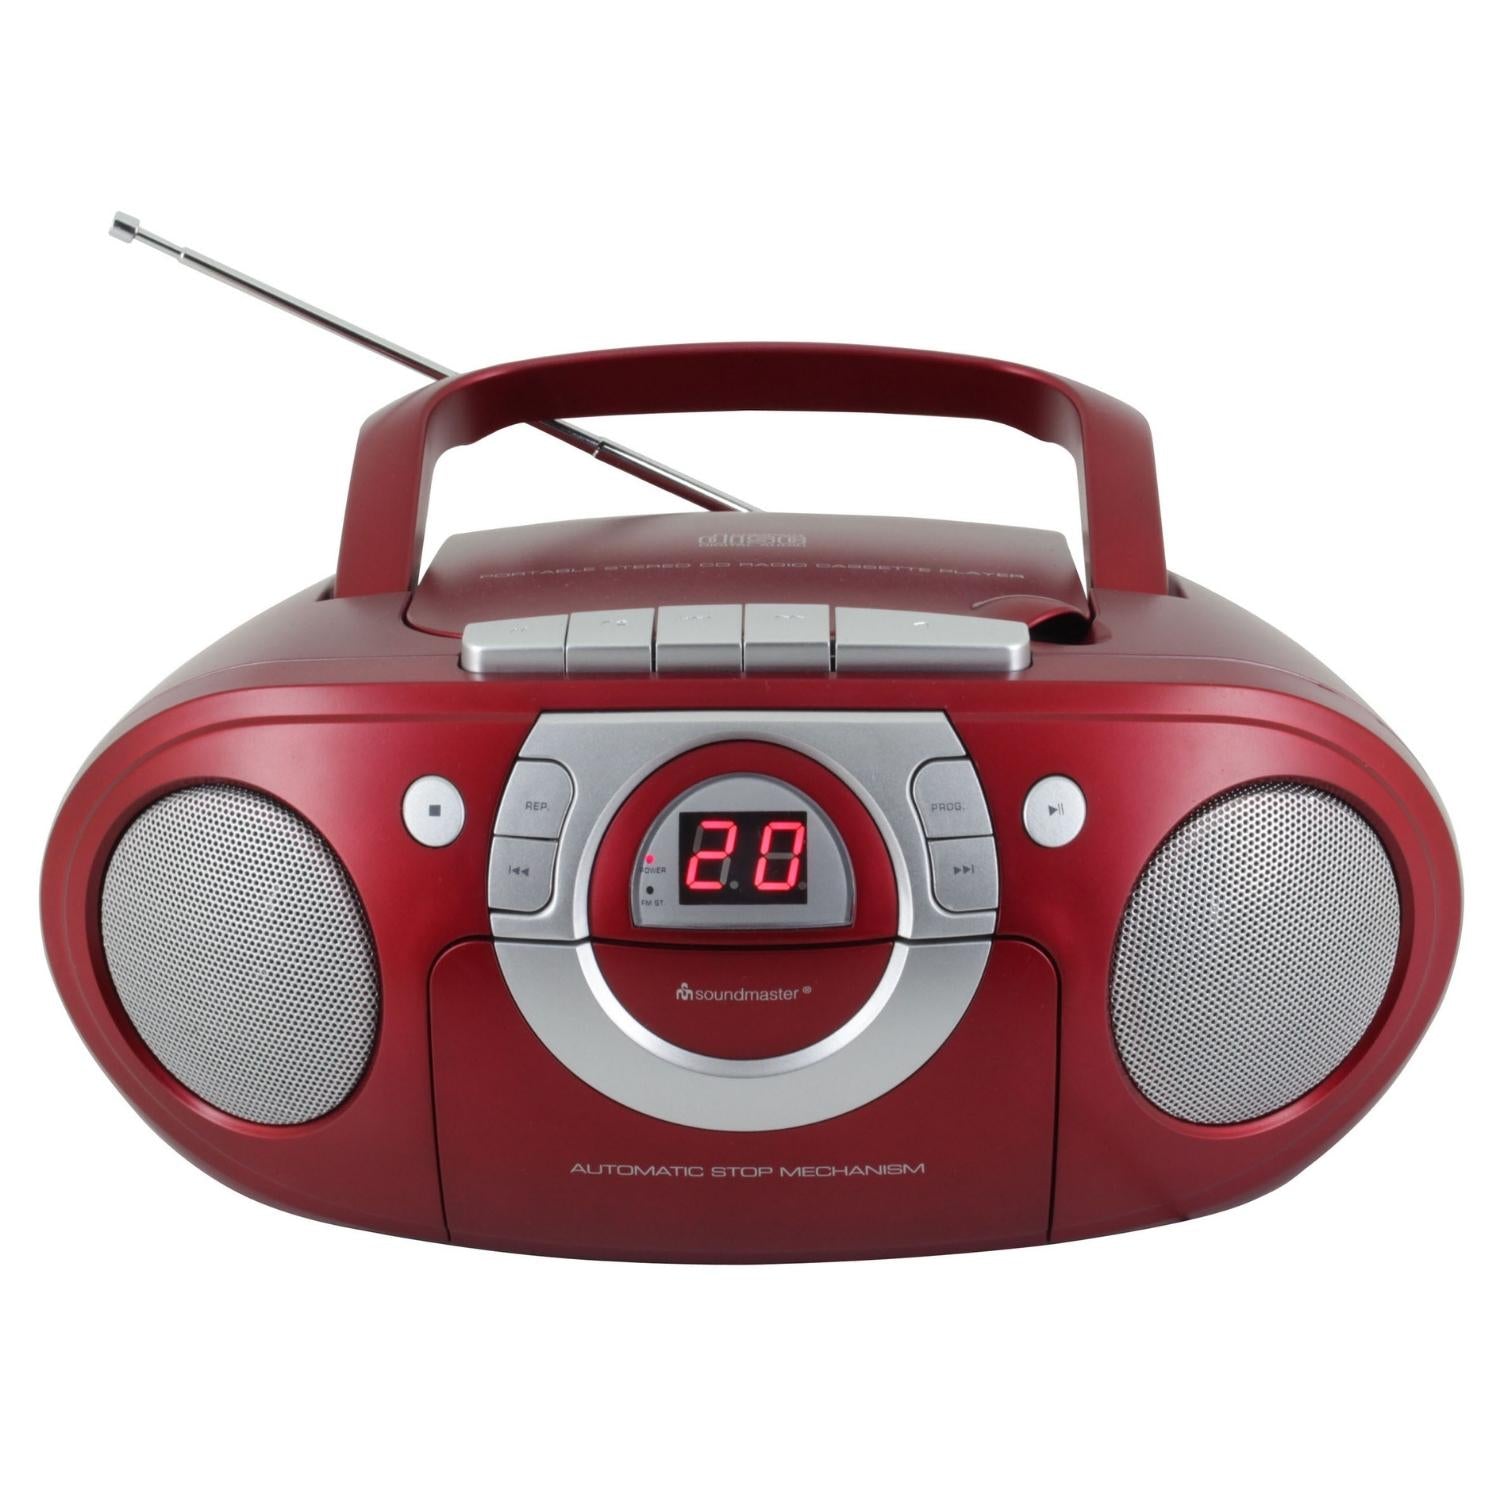 Soundmaster SCD5100RO radio portable CD player cassette recorder radio recorder